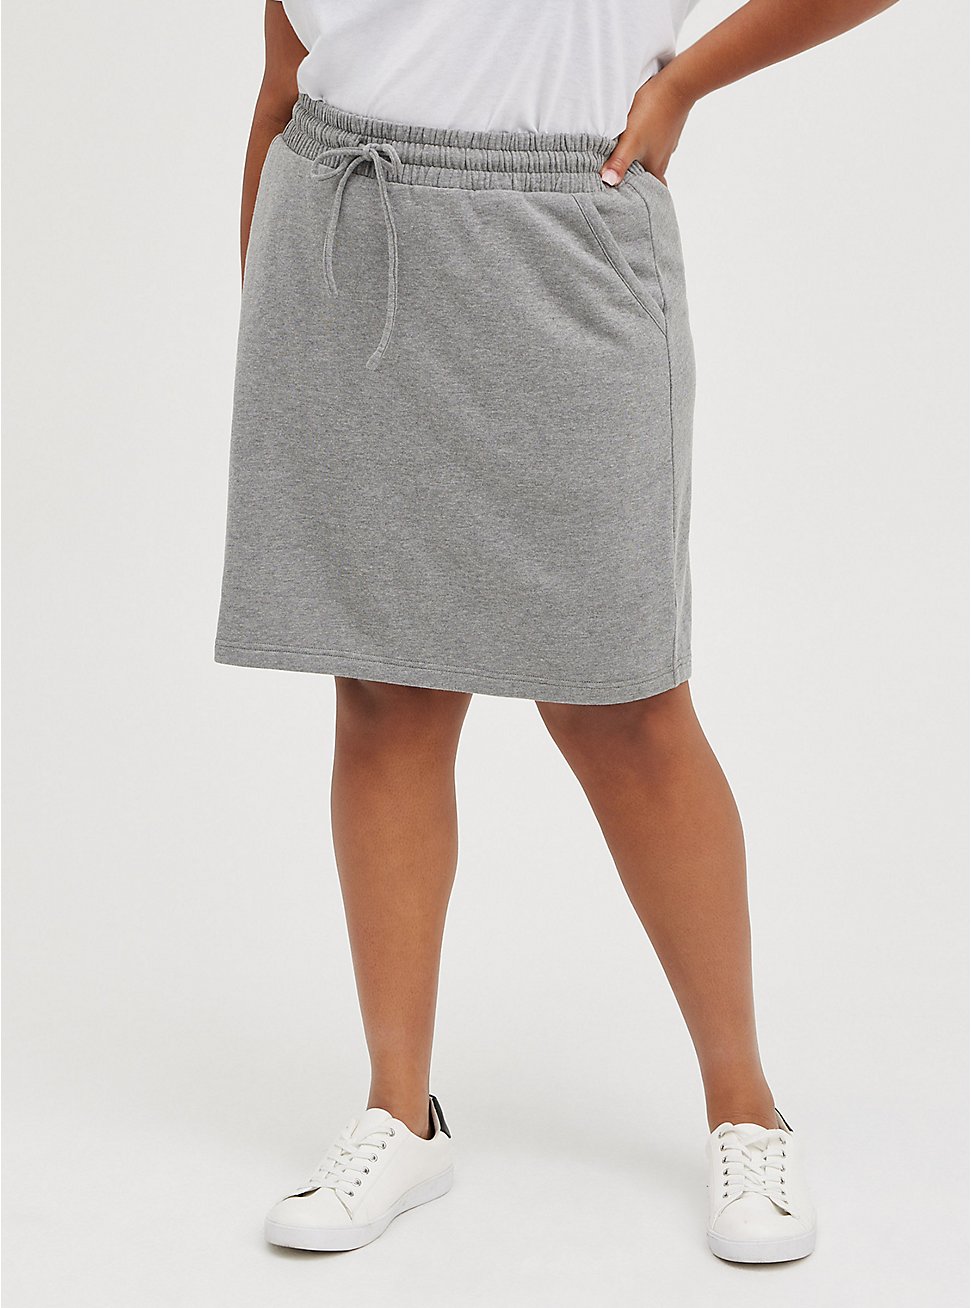 Plus Size A-Line Mini Skirt - Fleece Grey, HEATHER GREY, hi-res